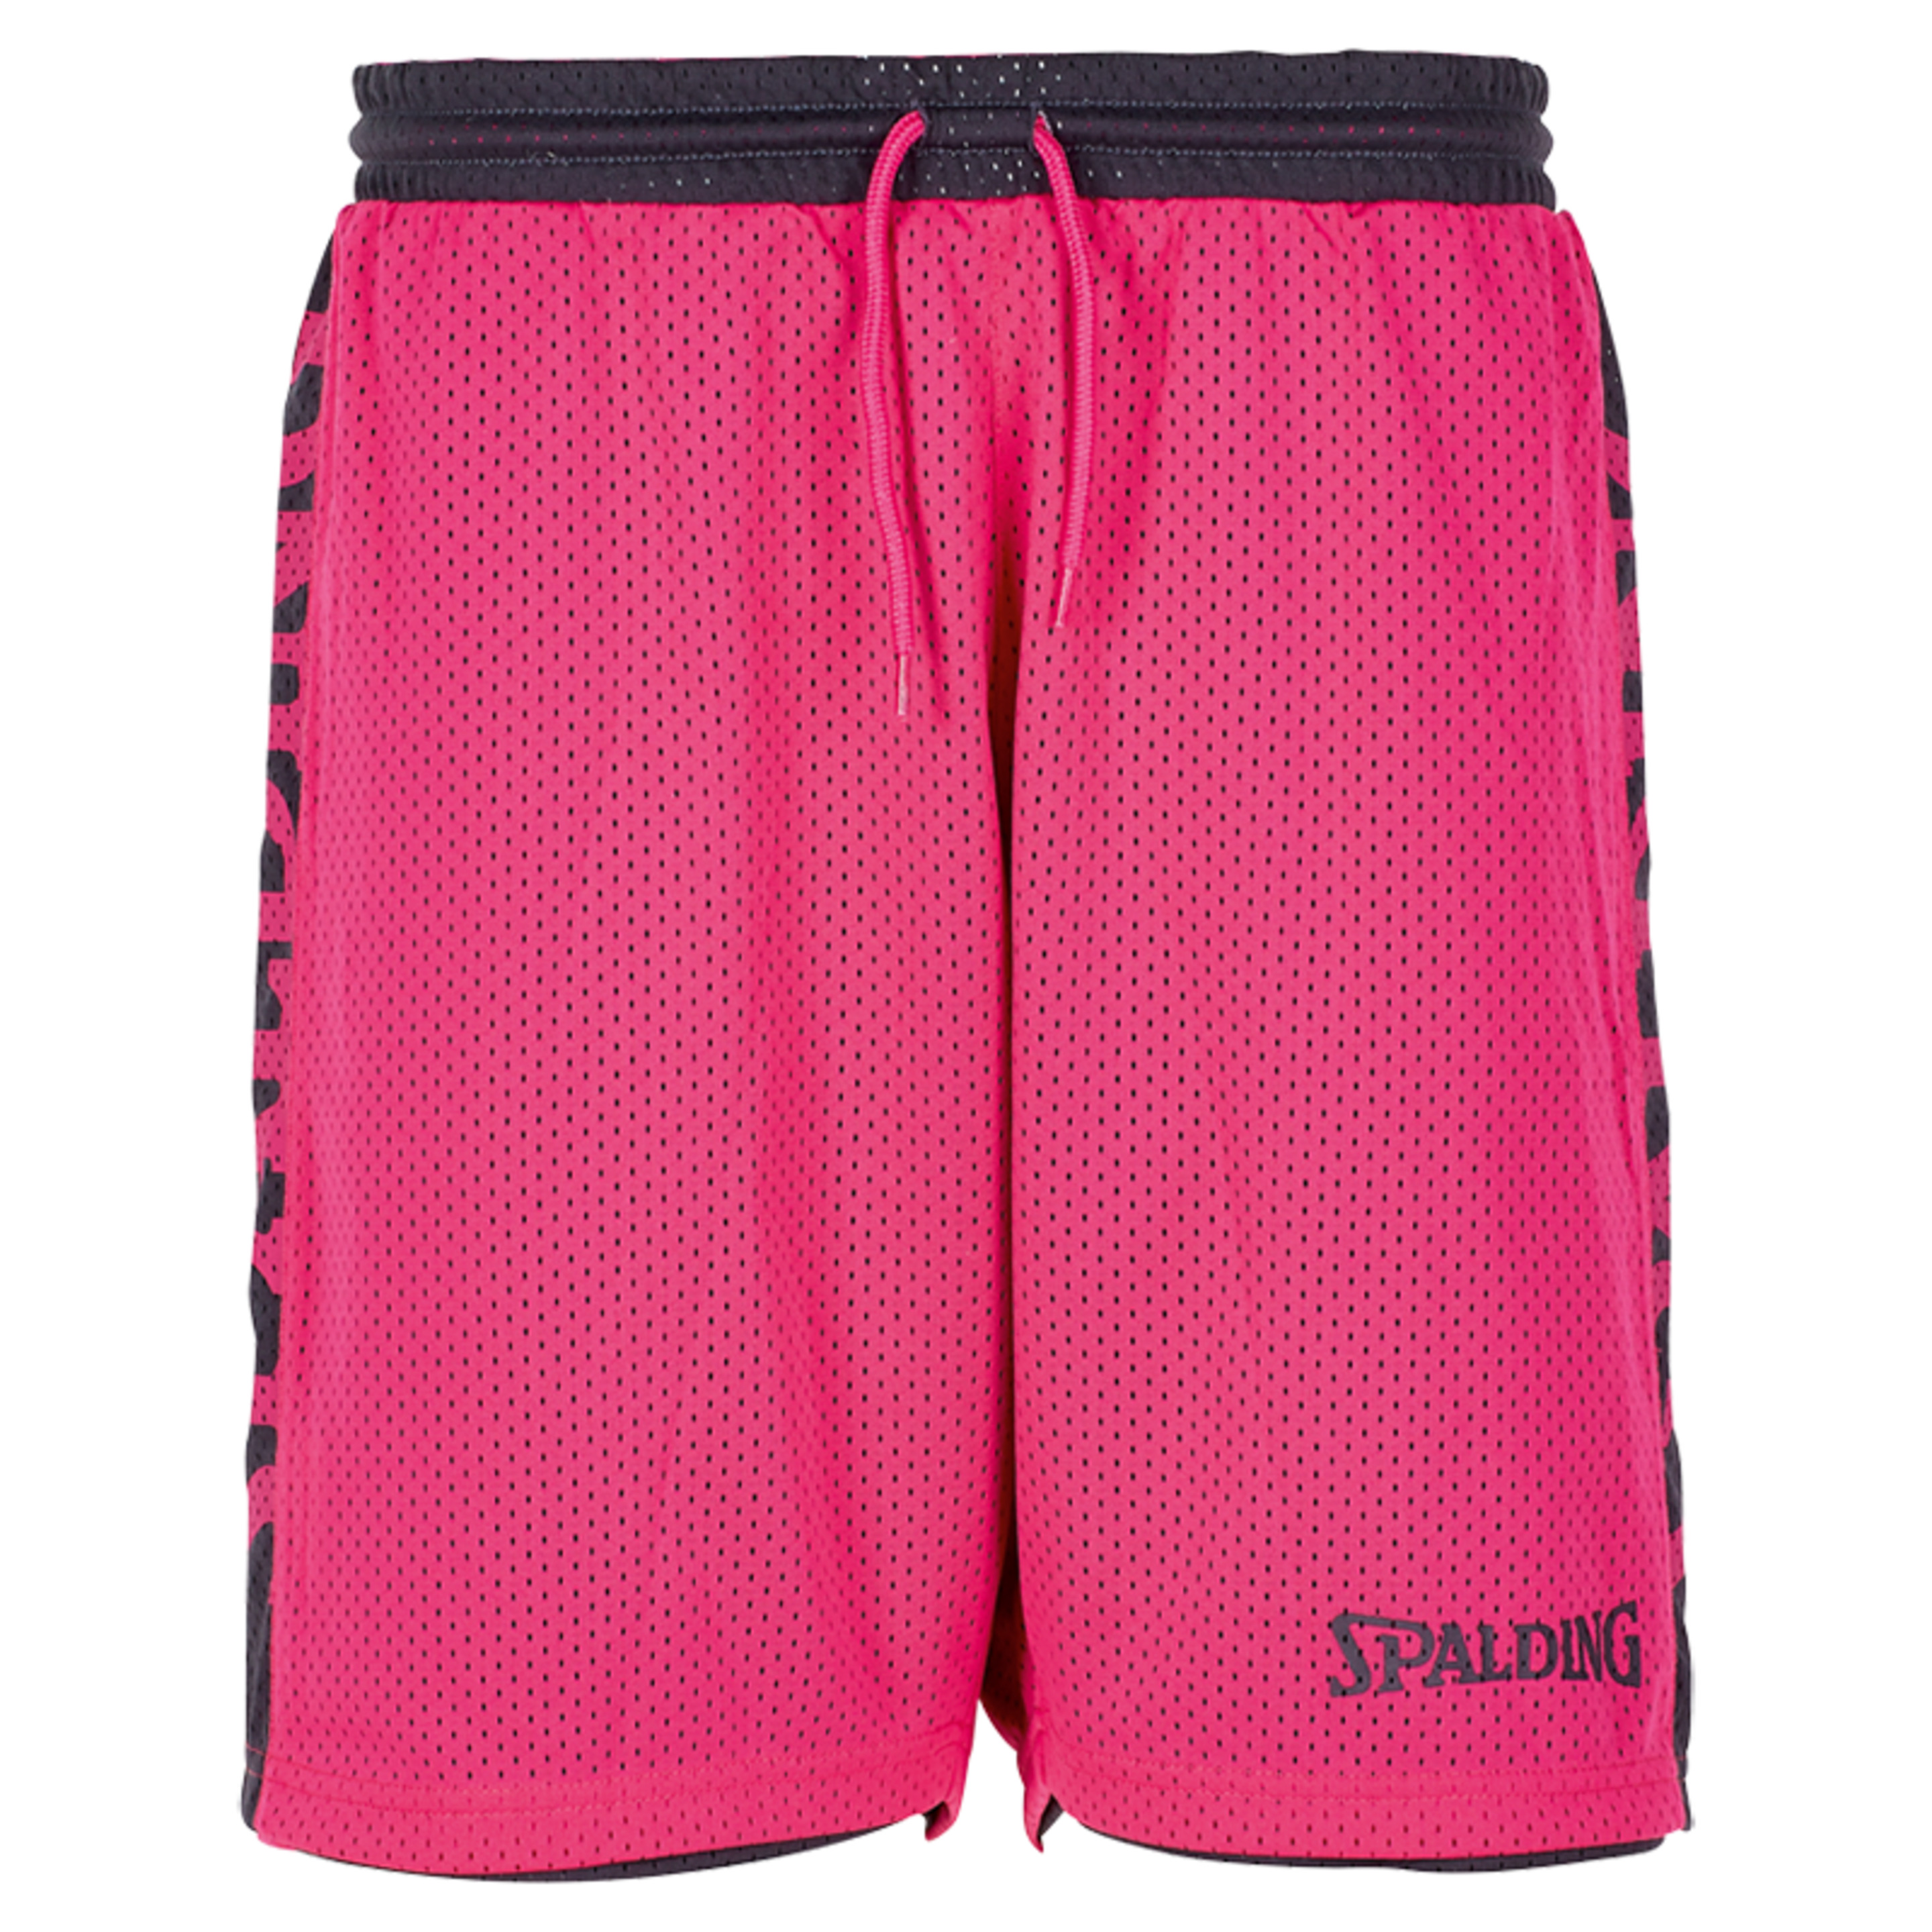 Essential Reversible Shorts 4her Black Spalding